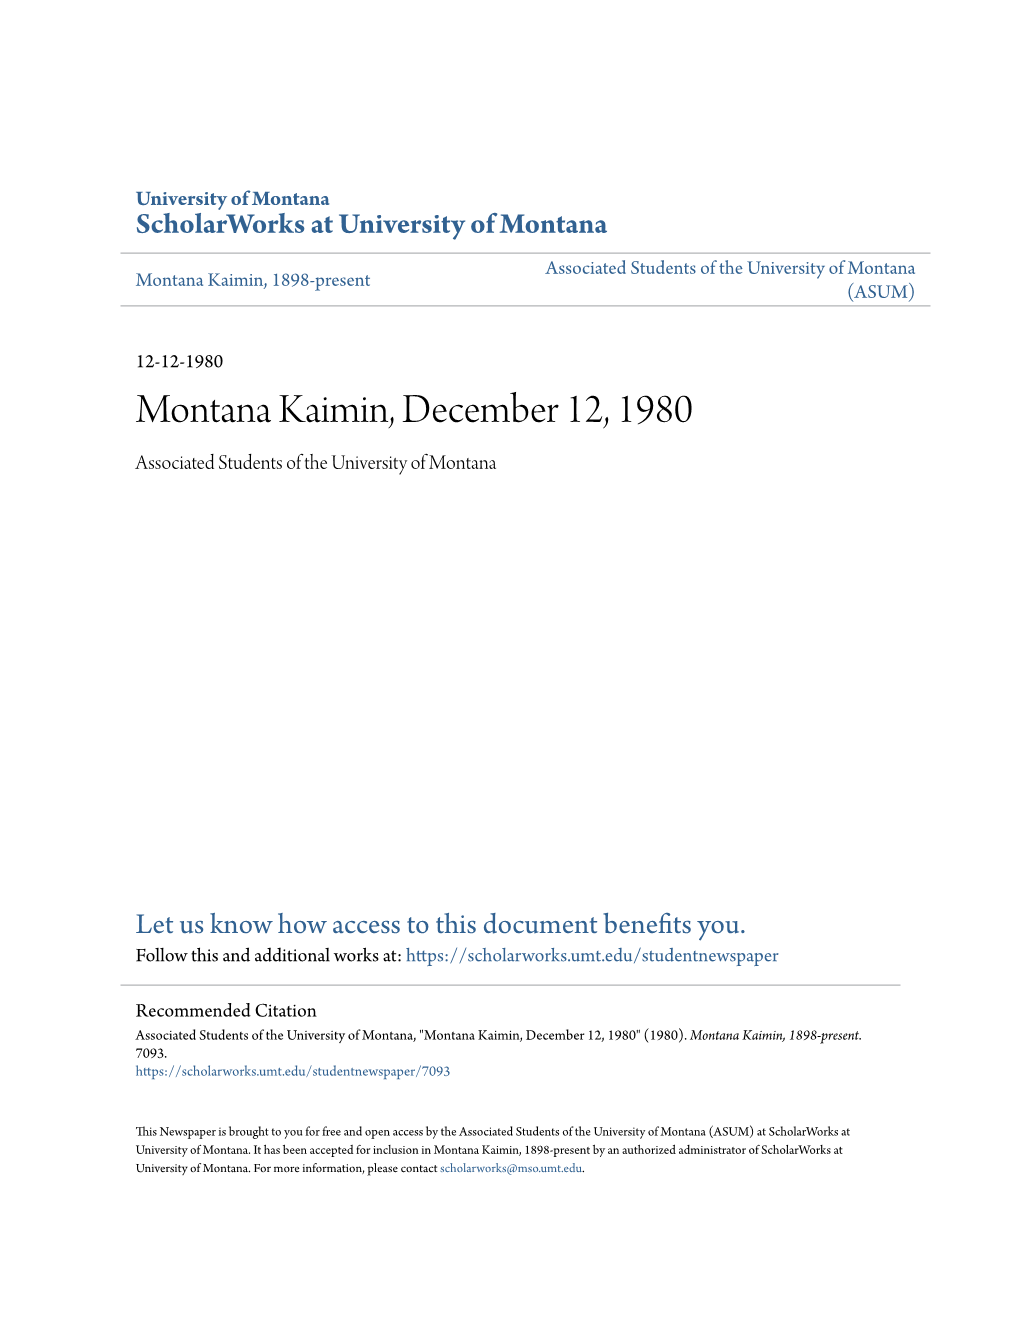 Montana Kaimin, December 12, 1980 Associated Students of the University of Montana